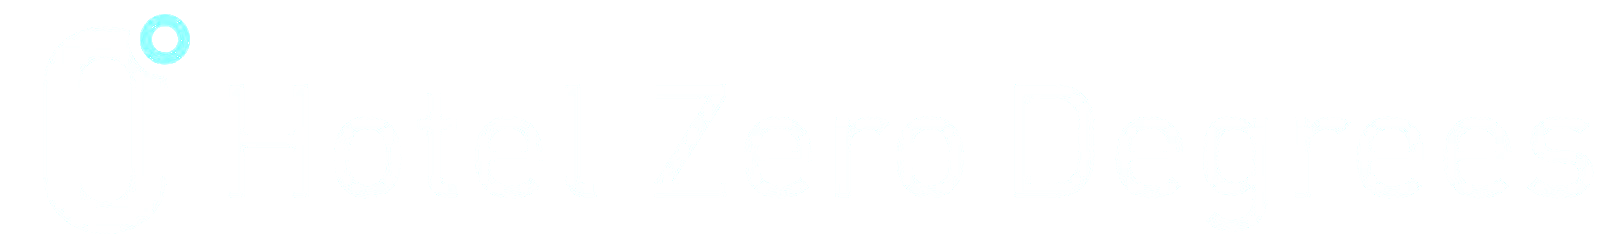 zerodegrees